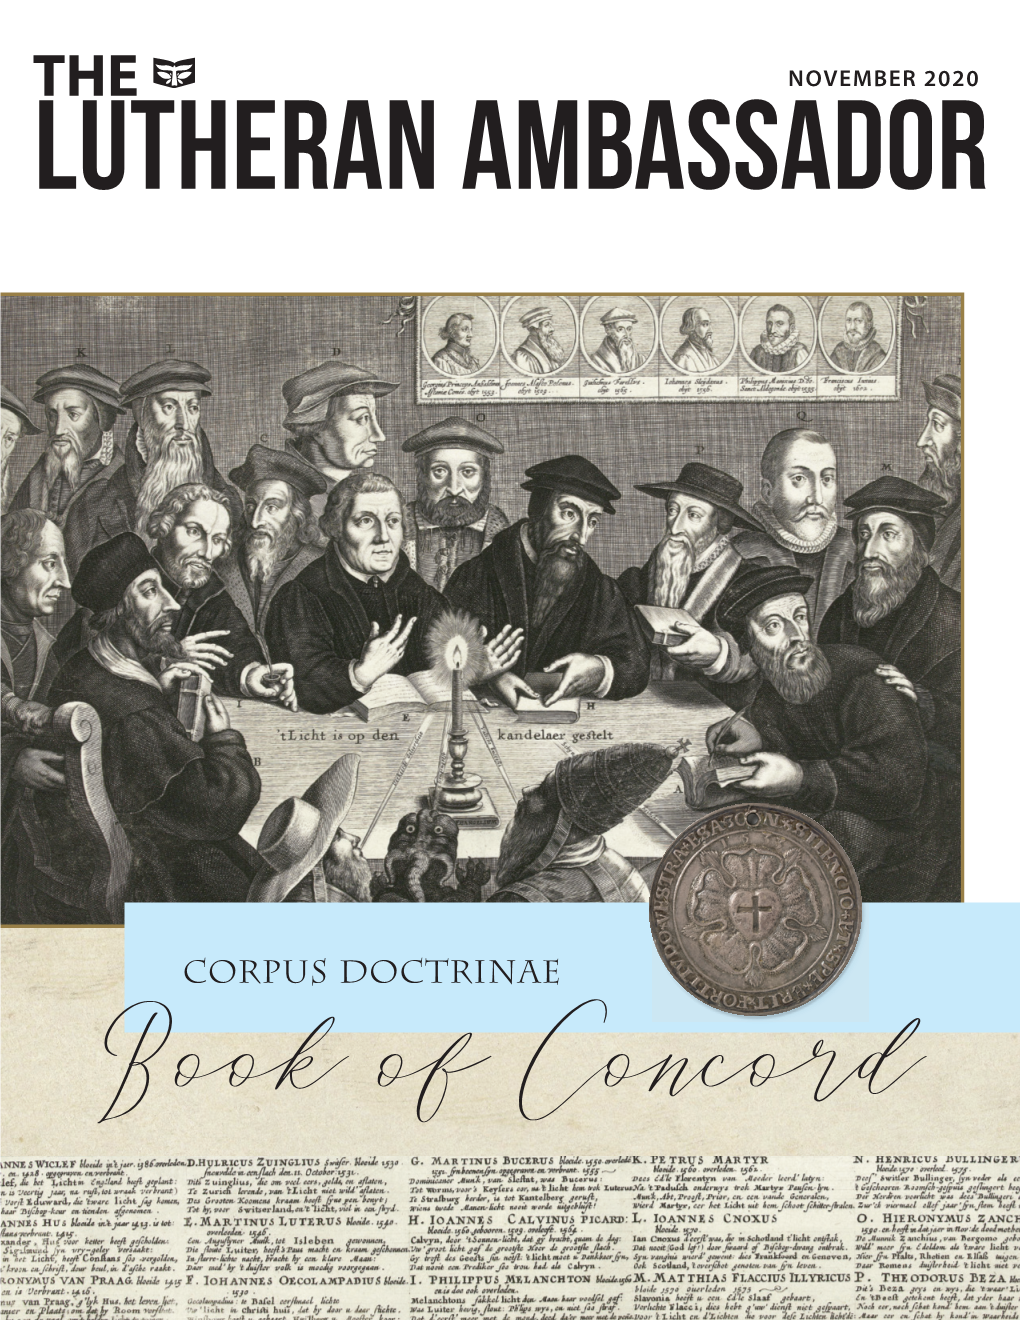 NOVEMBER 2020 Lutheran AMBASSADOR